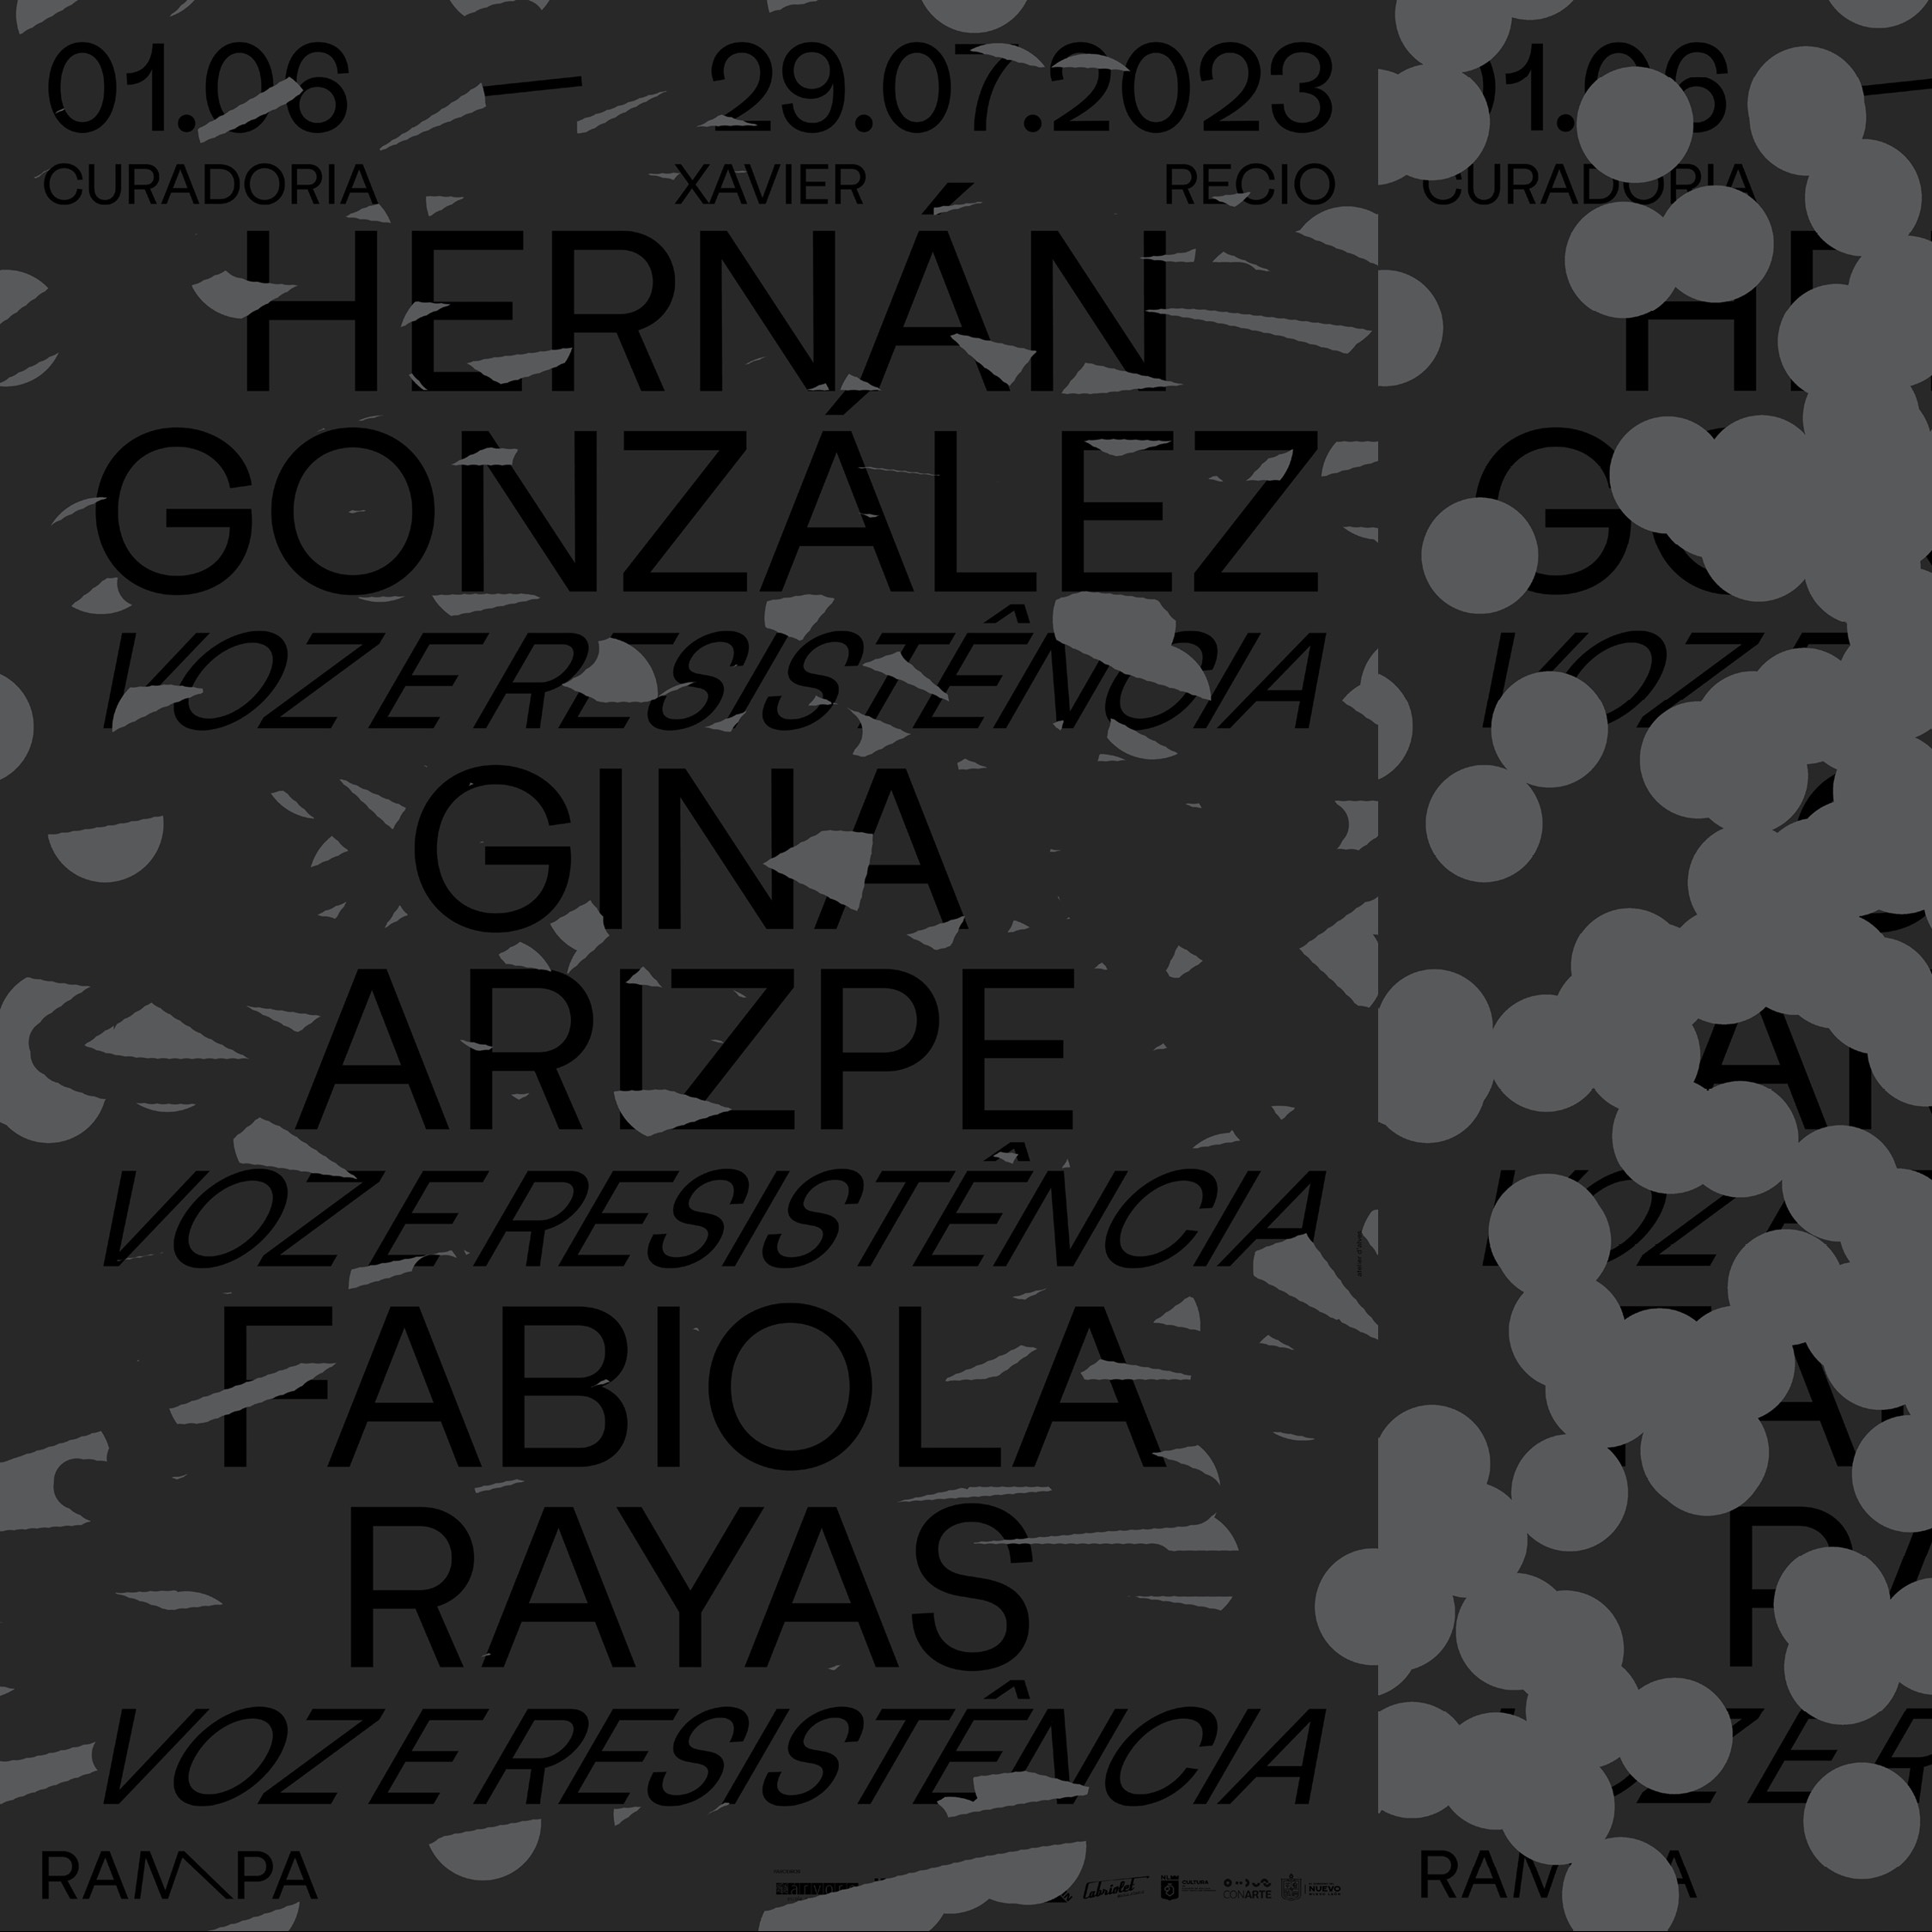 >Gina Arizpe participa en exposición titulada "Voz y resistencia" en Porto